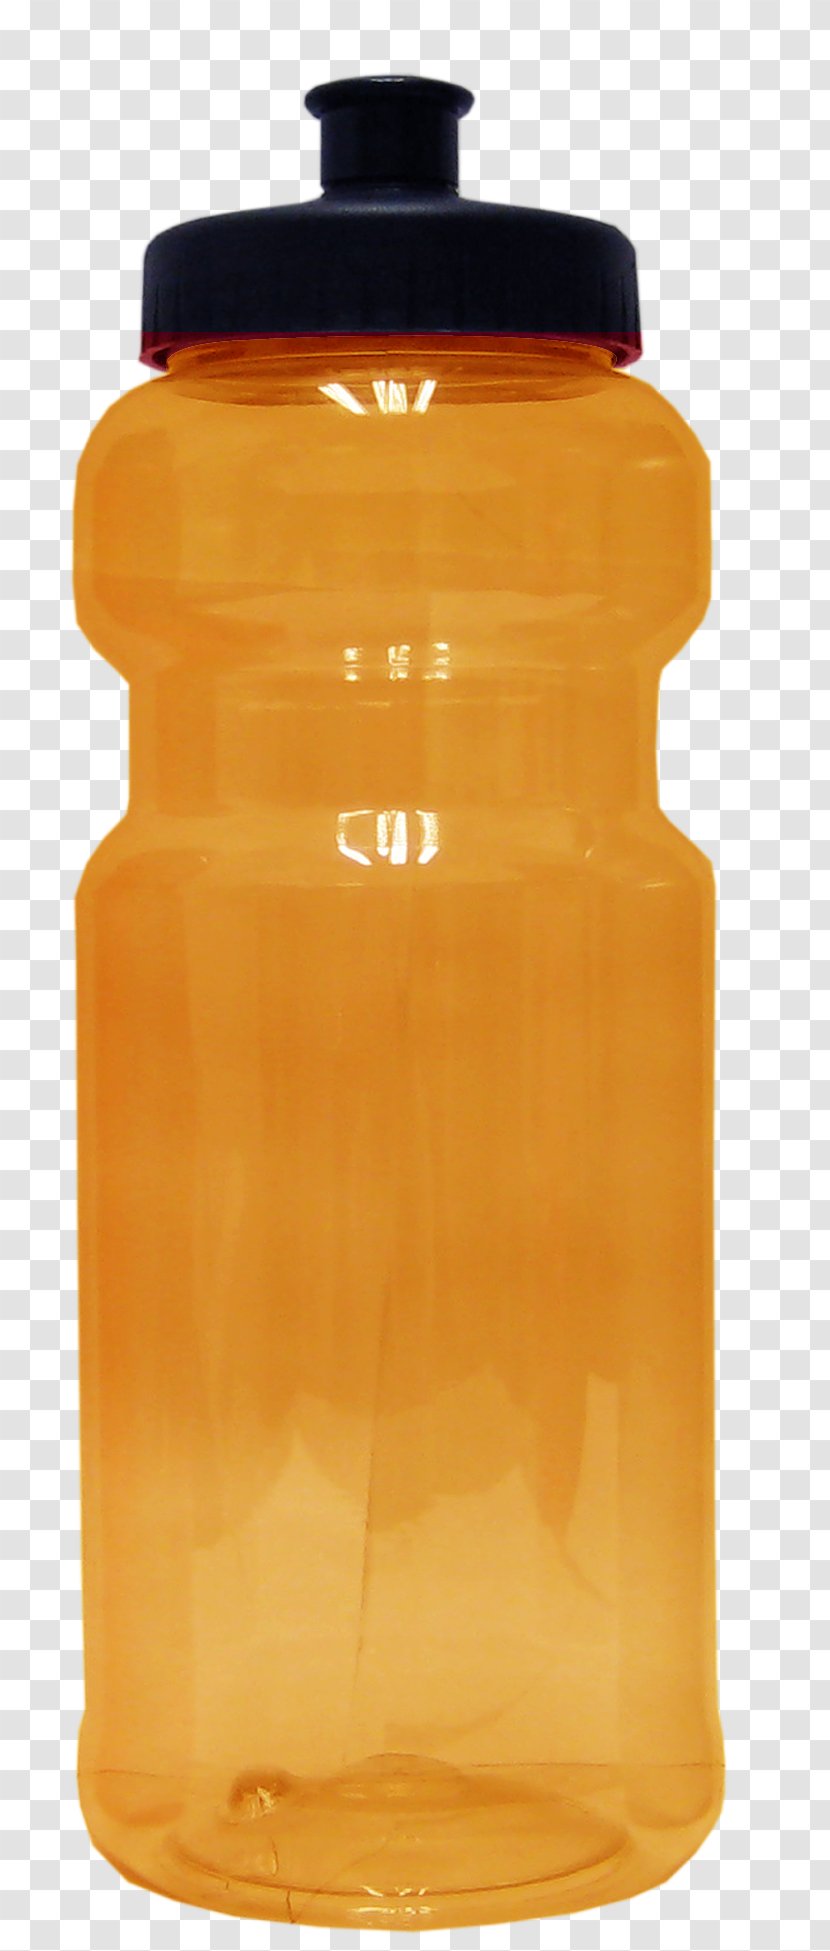 Water Bottles Glass Bottle Plastic Mason Jar - Chiwawa Transparent PNG